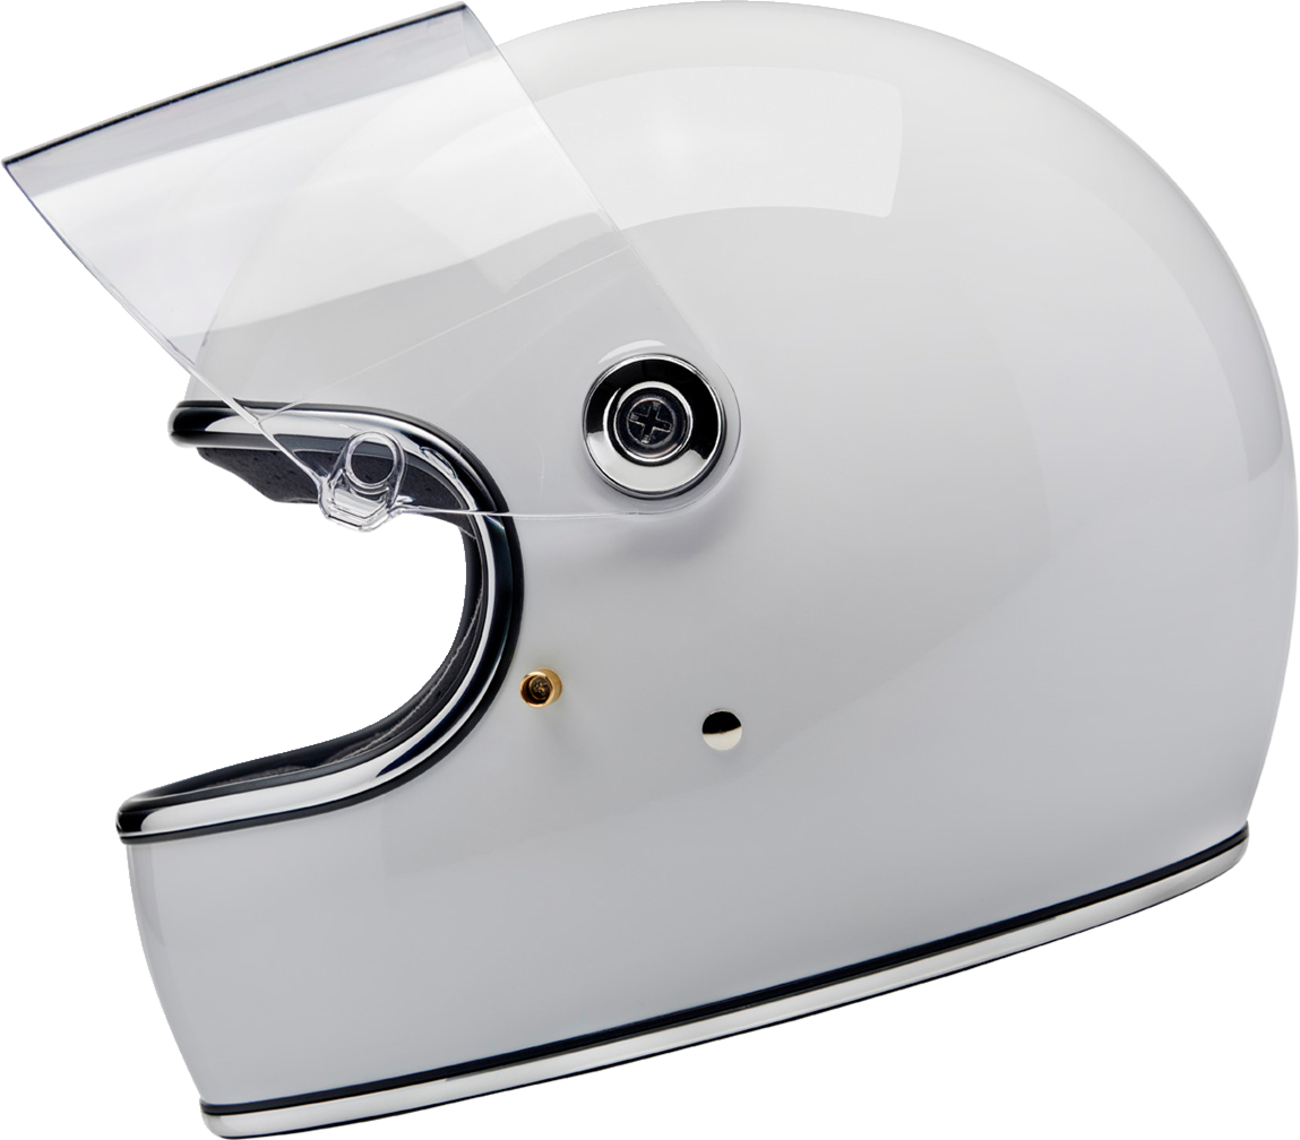 BILTWELL Gringo S Helmet - Gloss White - Medium 1003-102-503